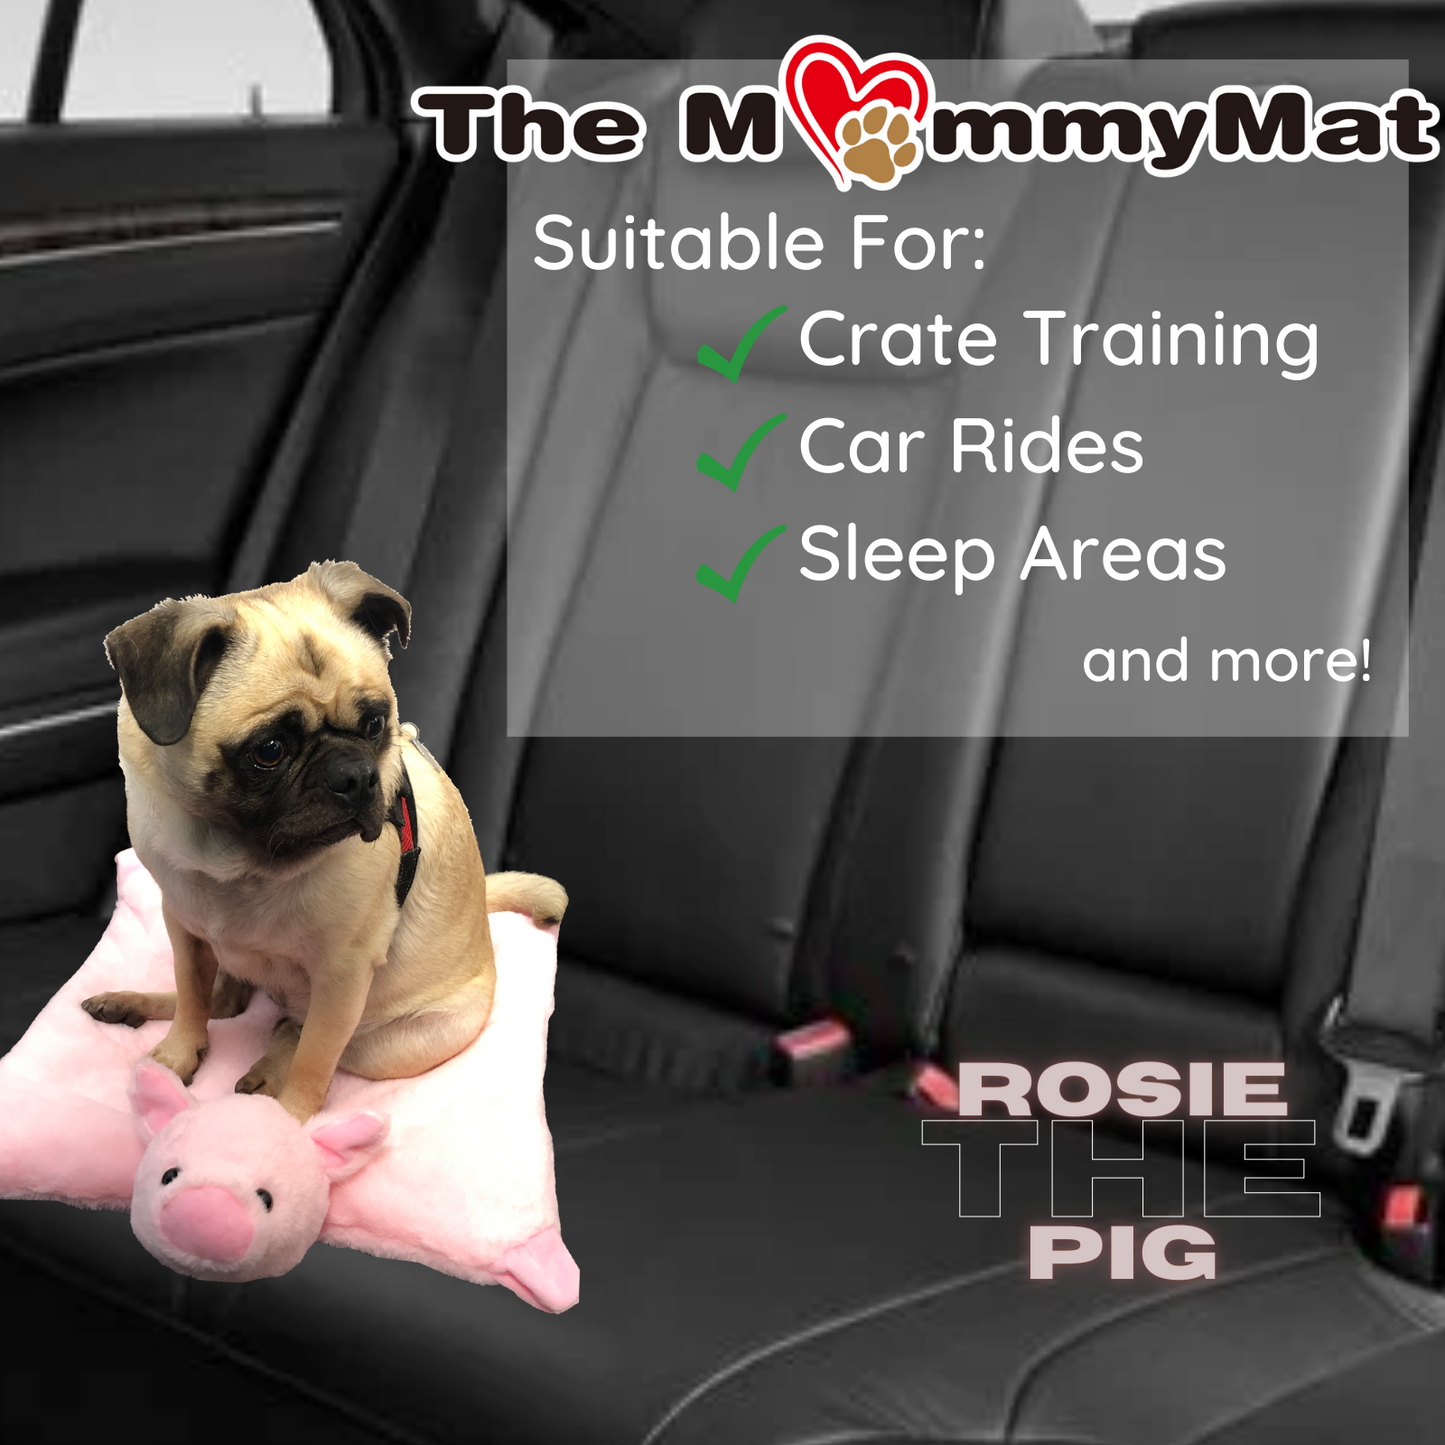 Pet MommyMat - Rosie the Pig